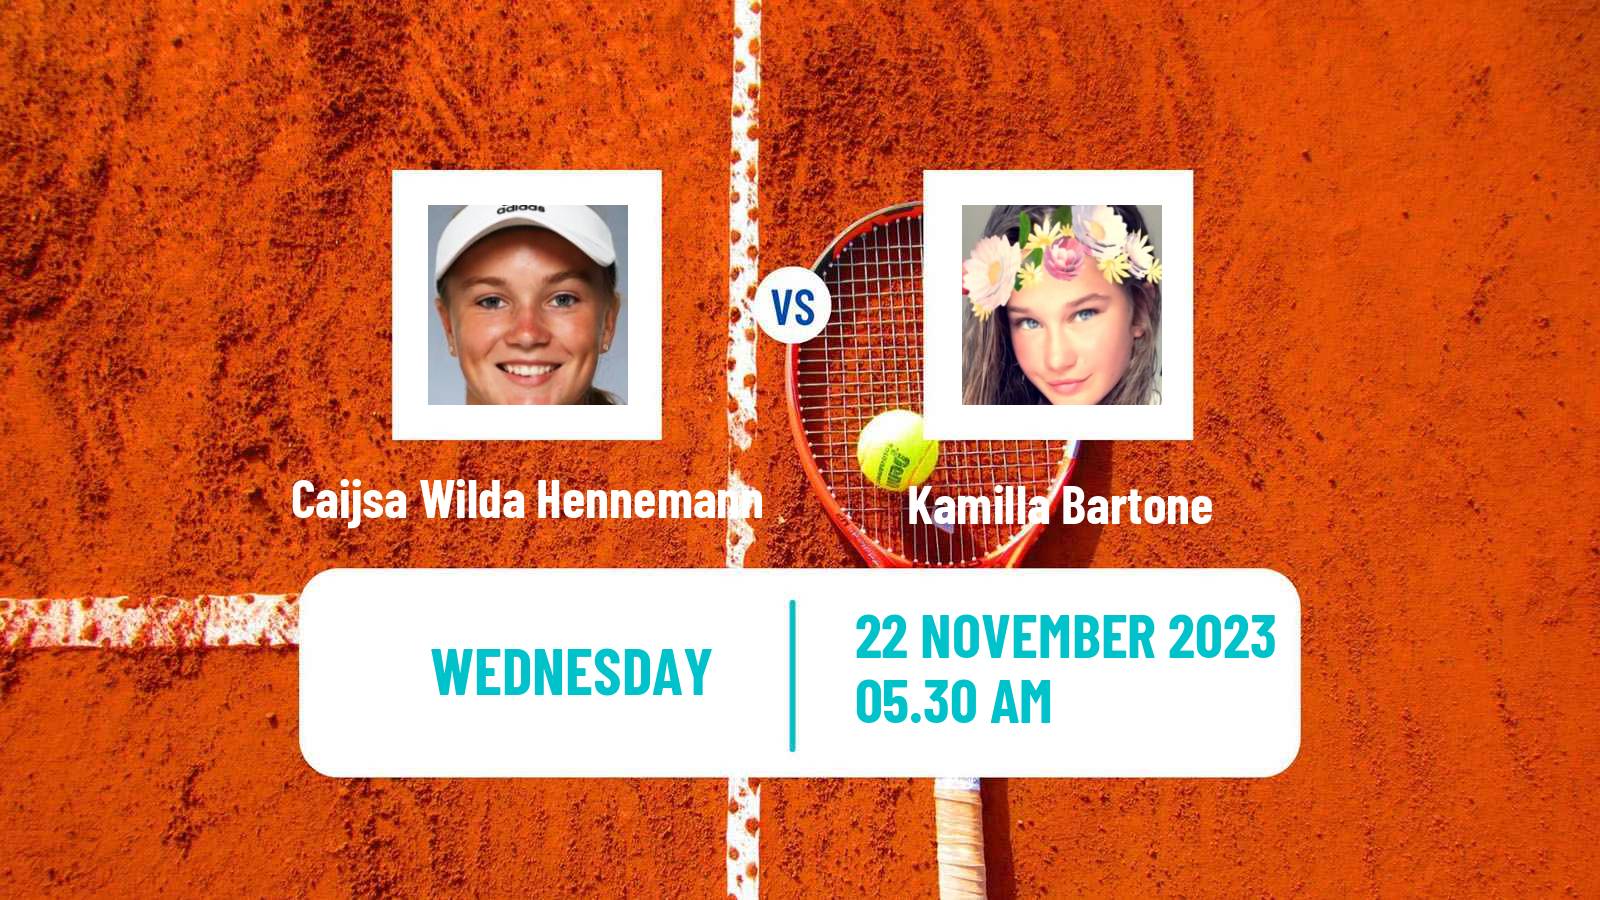 Tennis ITF W25 Ortisei Women Caijsa Wilda Hennemann - Kamilla Bartone